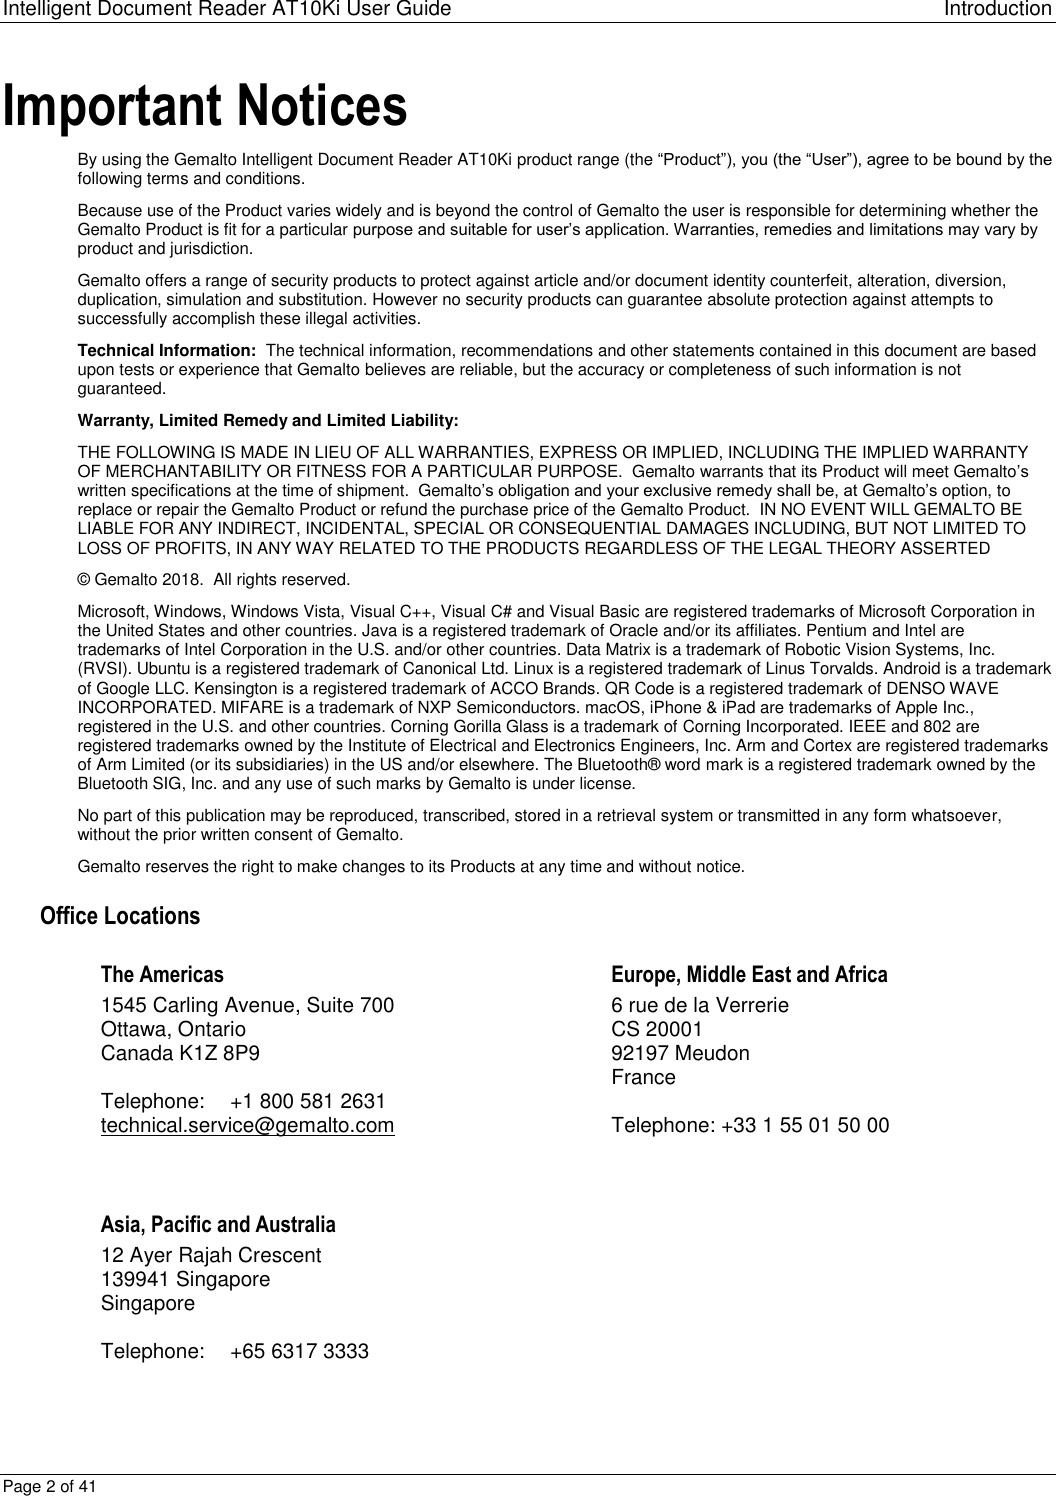 Page 2 of Gemalto PR01523 ation Scanner User Manual